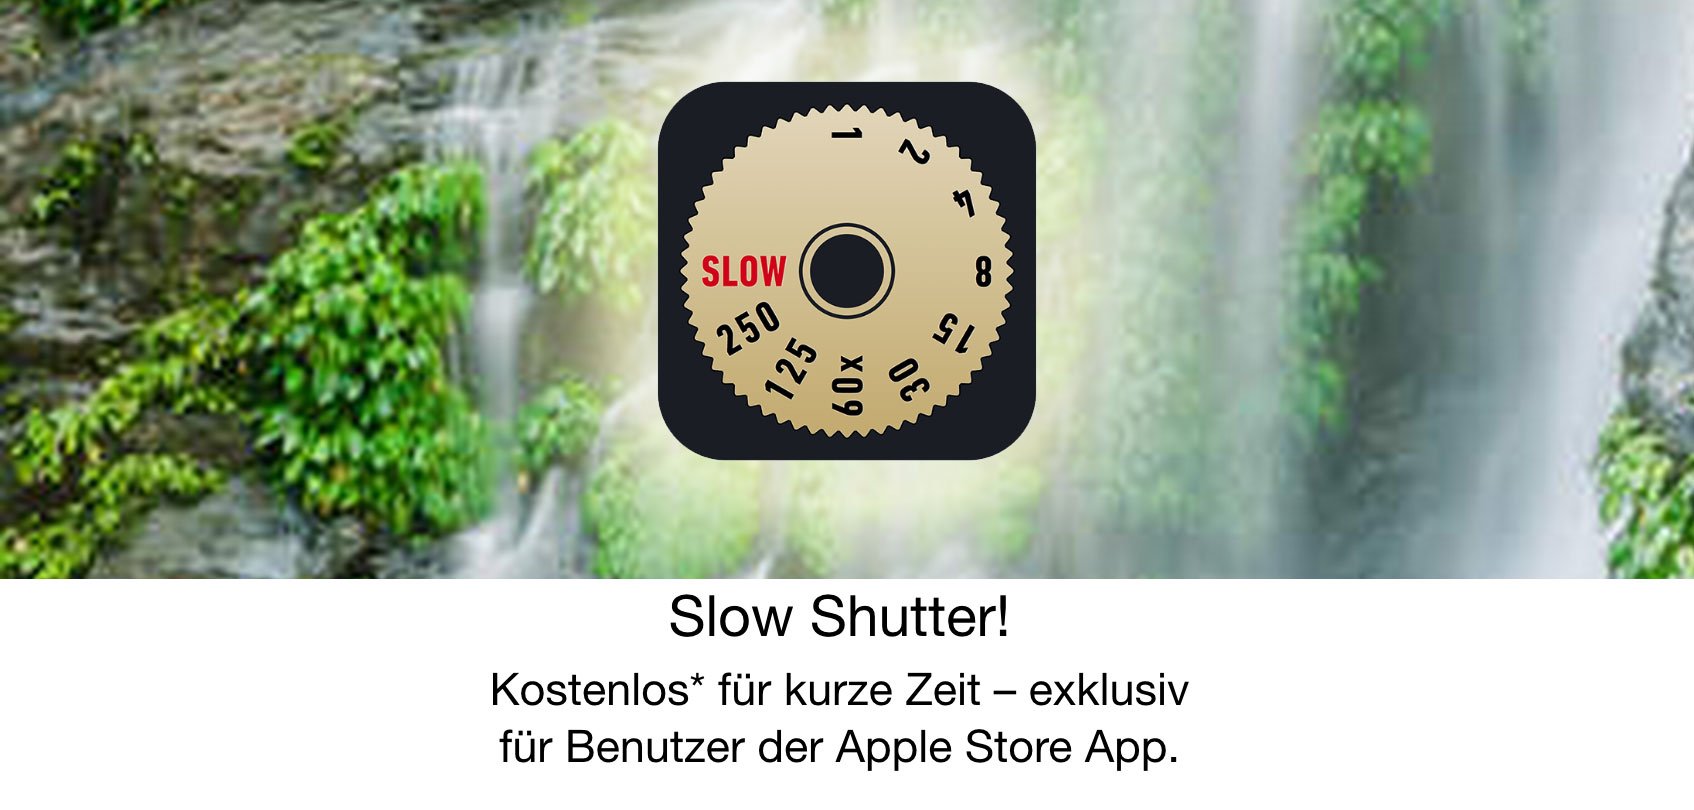 Slow Shutter! kostenlos über Apple Store App 5